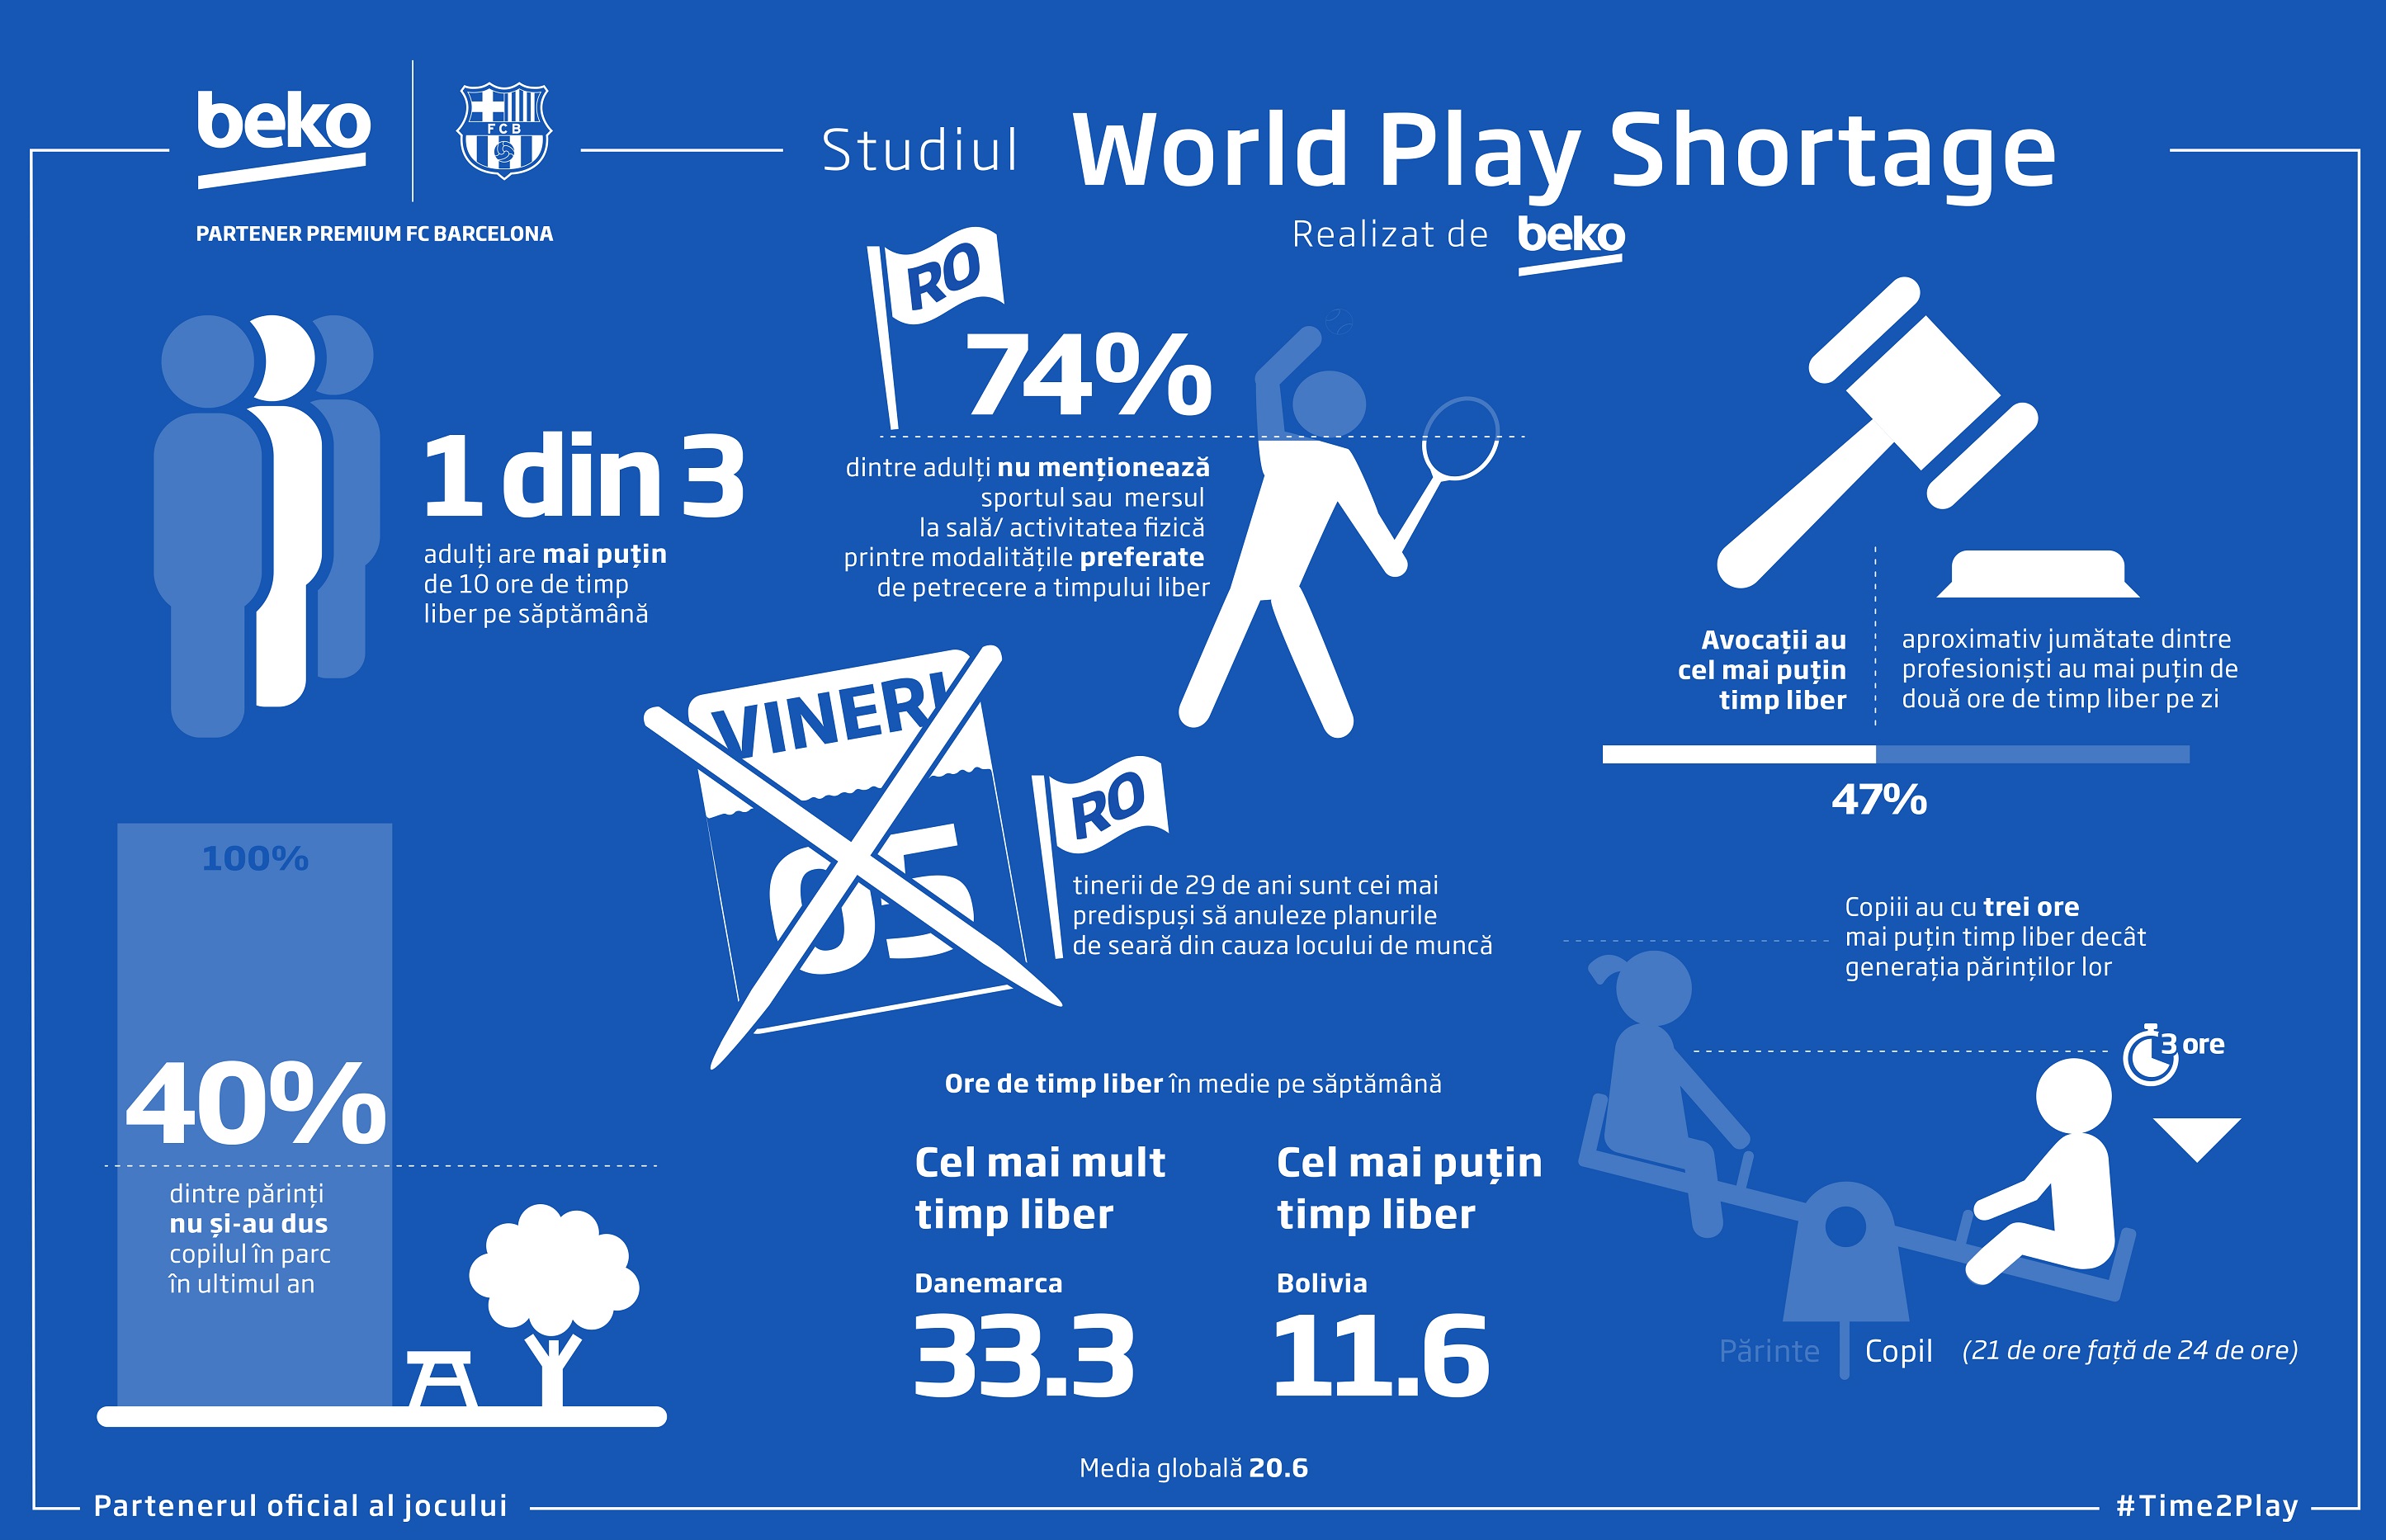 Beko 2017 PR World Play Shortage Report - Infographic